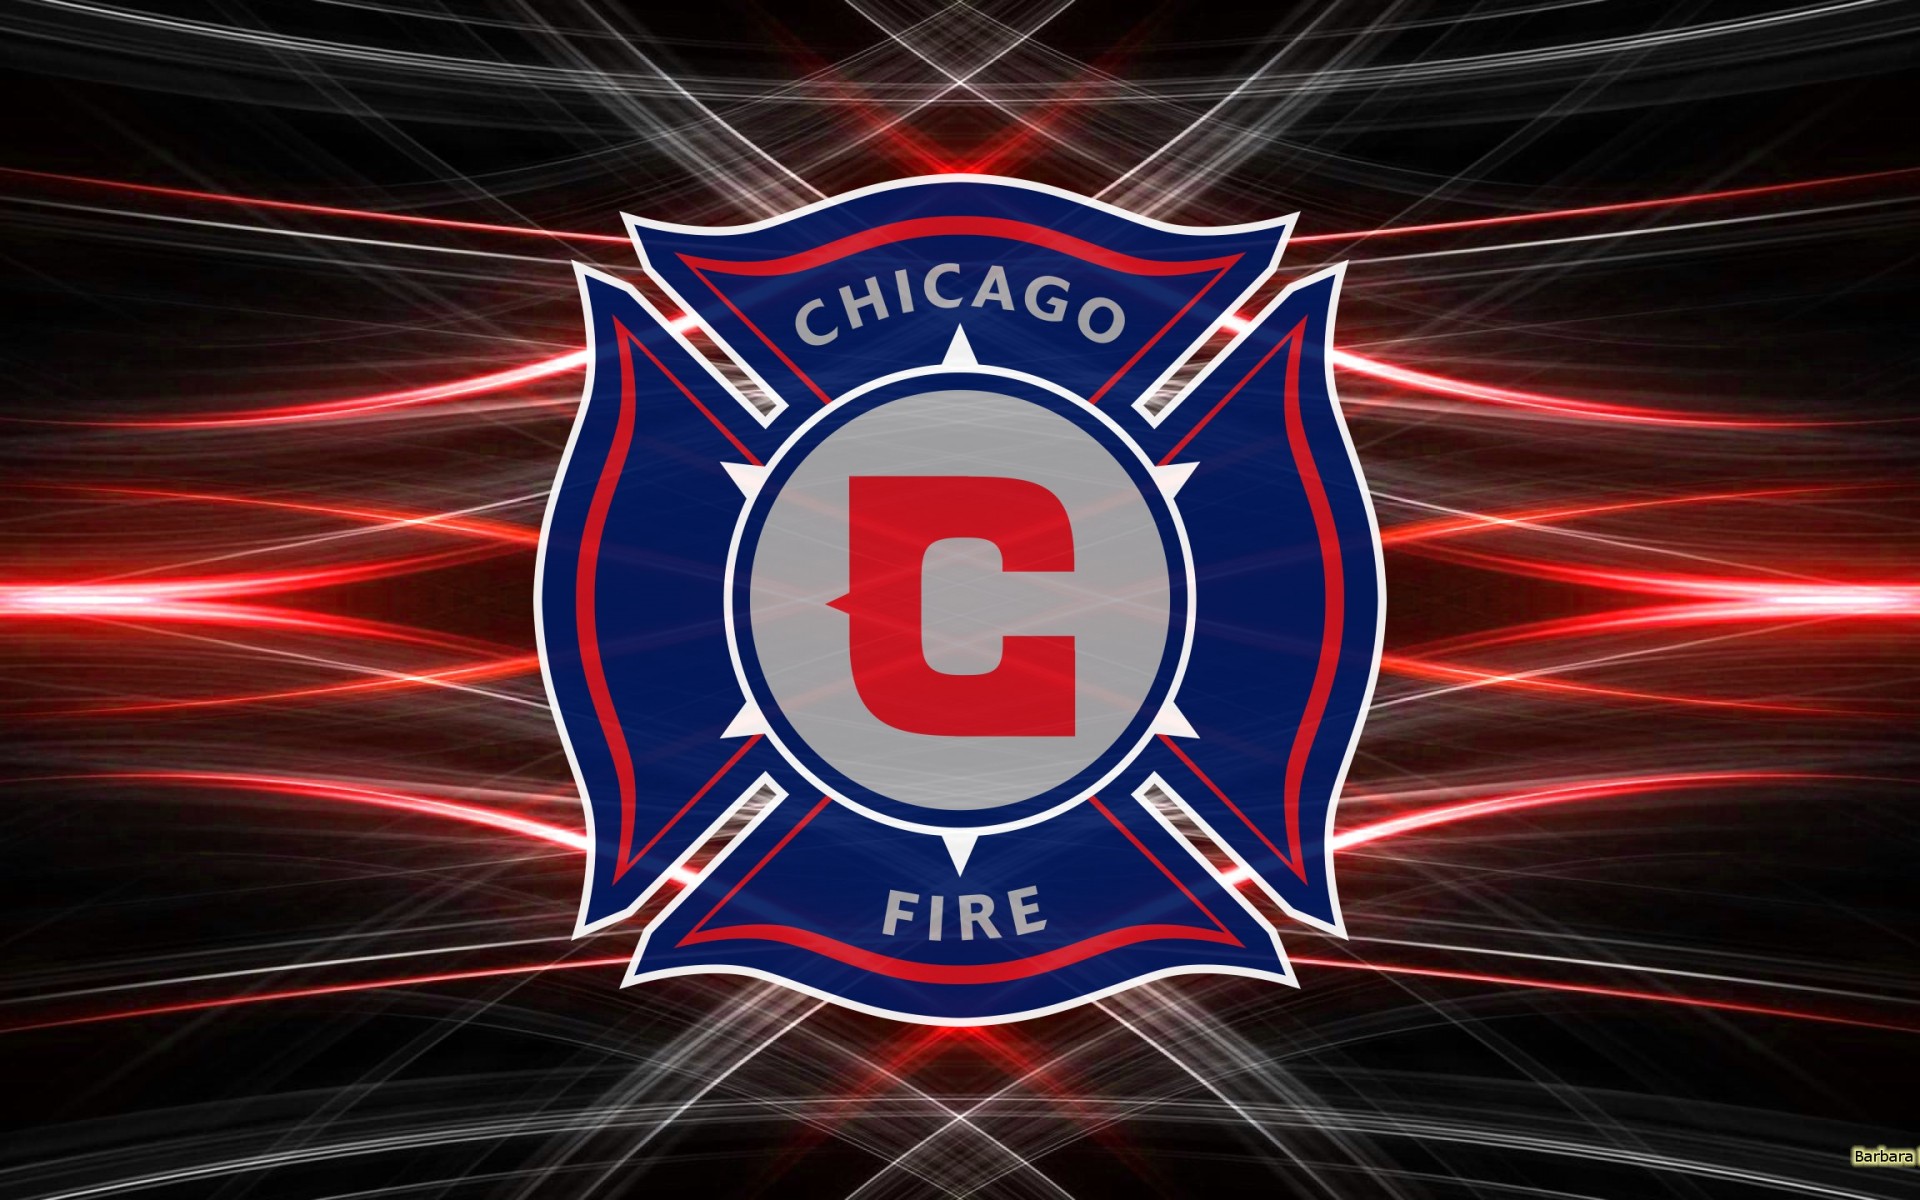 Chicago Fire Soccer Club Wallpaper Full HD Baltana